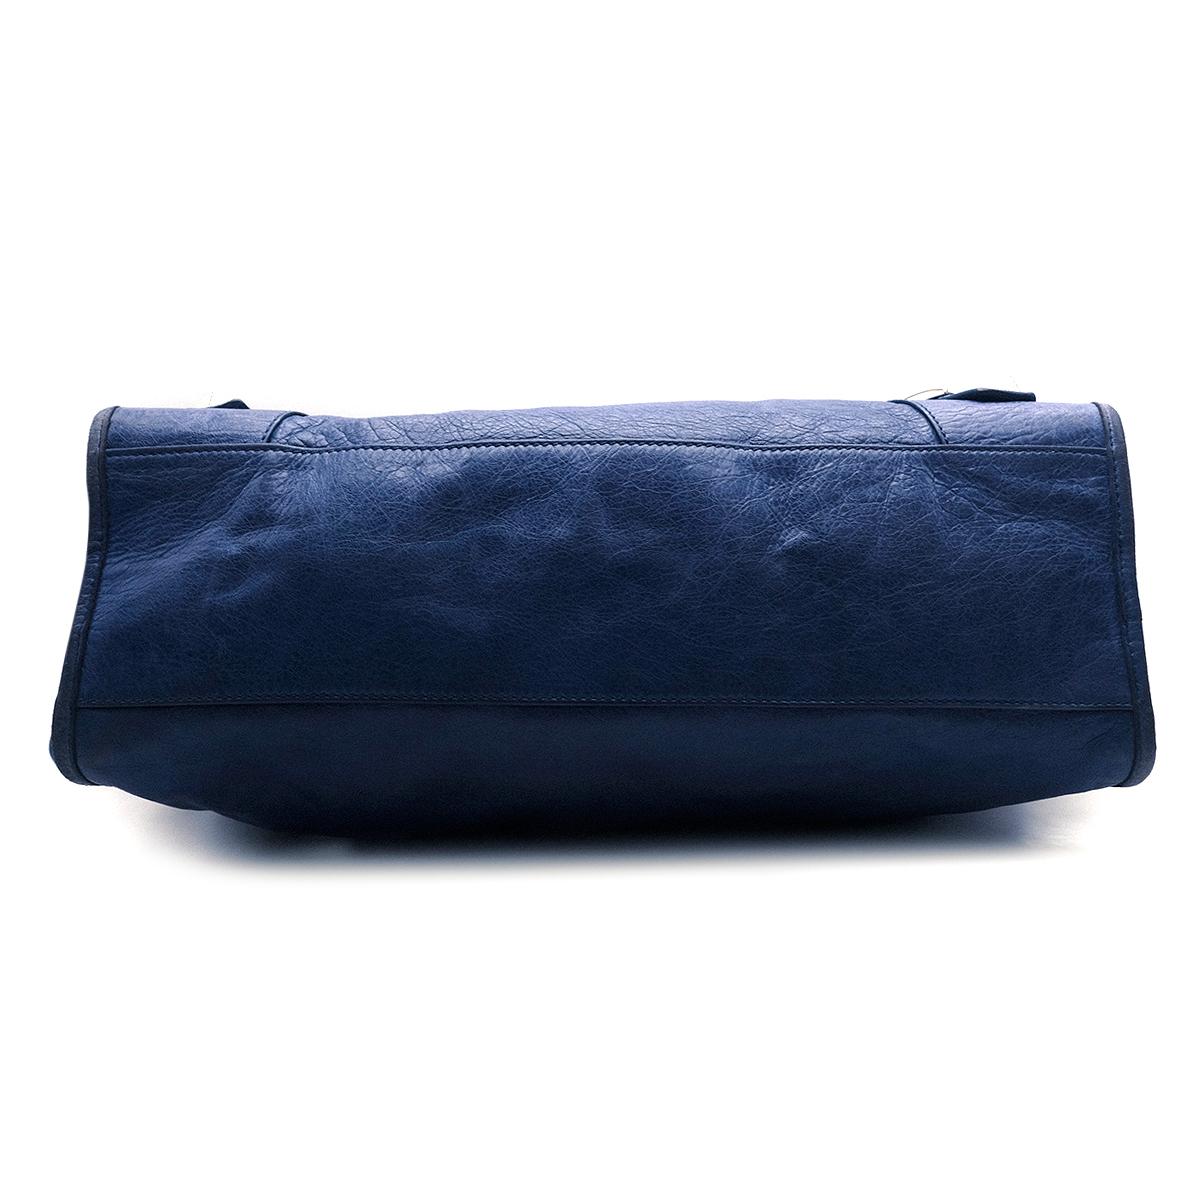 Black Balenciaga Classic Blue City Bag